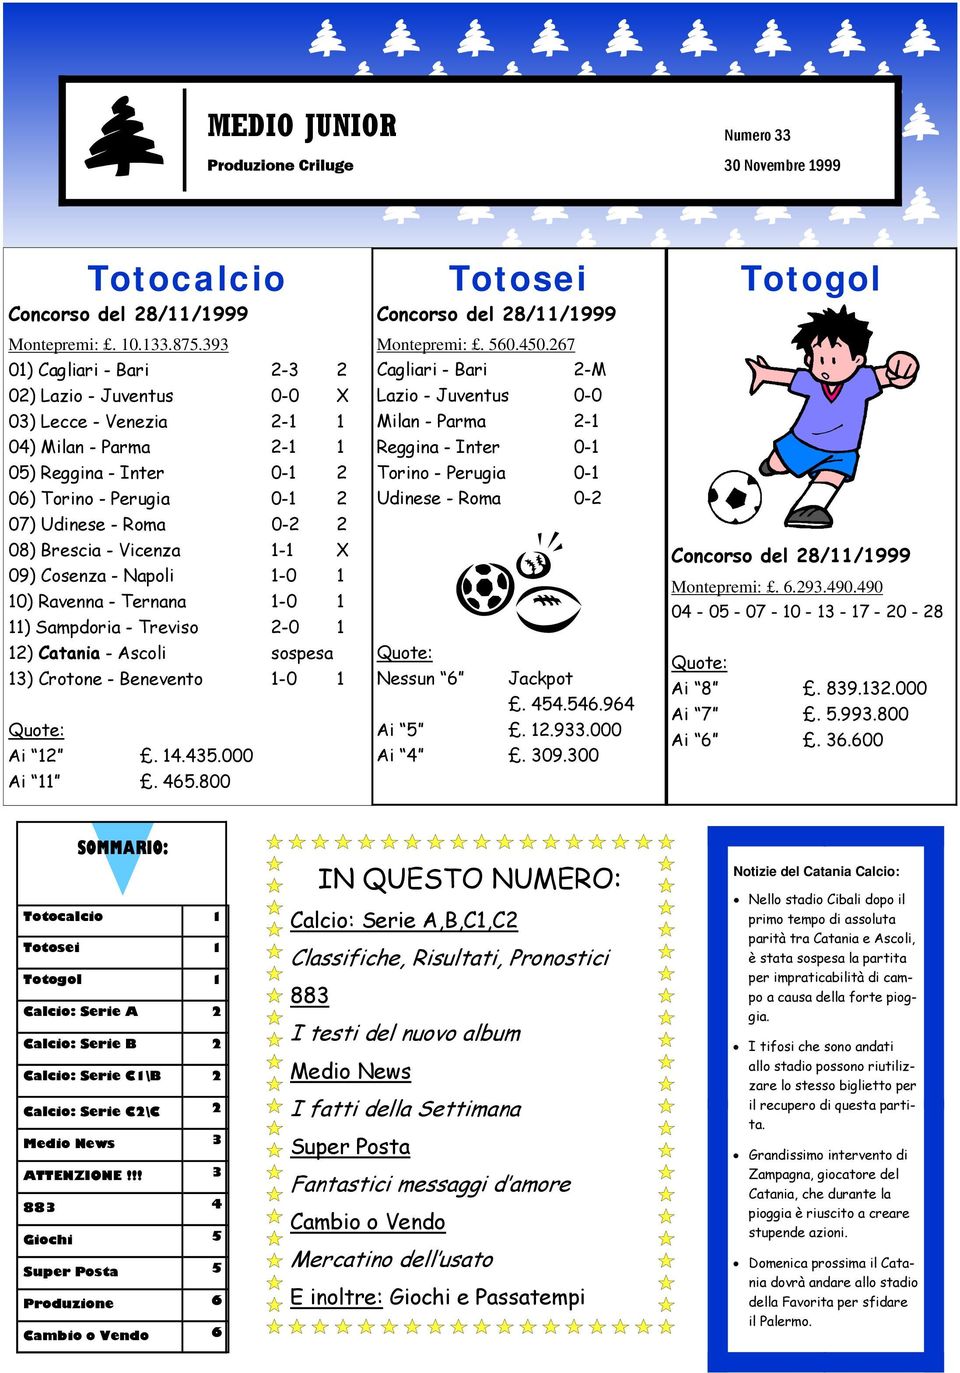 09) Cosenza - Napoli -0 0) Ravenna - Ternana -0 ) Sampdoria - Treviso 2-0 2) Catania - Ascoli sospesa 3) Crotone - Benevento -0 Quote: Ai 2. 4.435.000 Ai. 465.